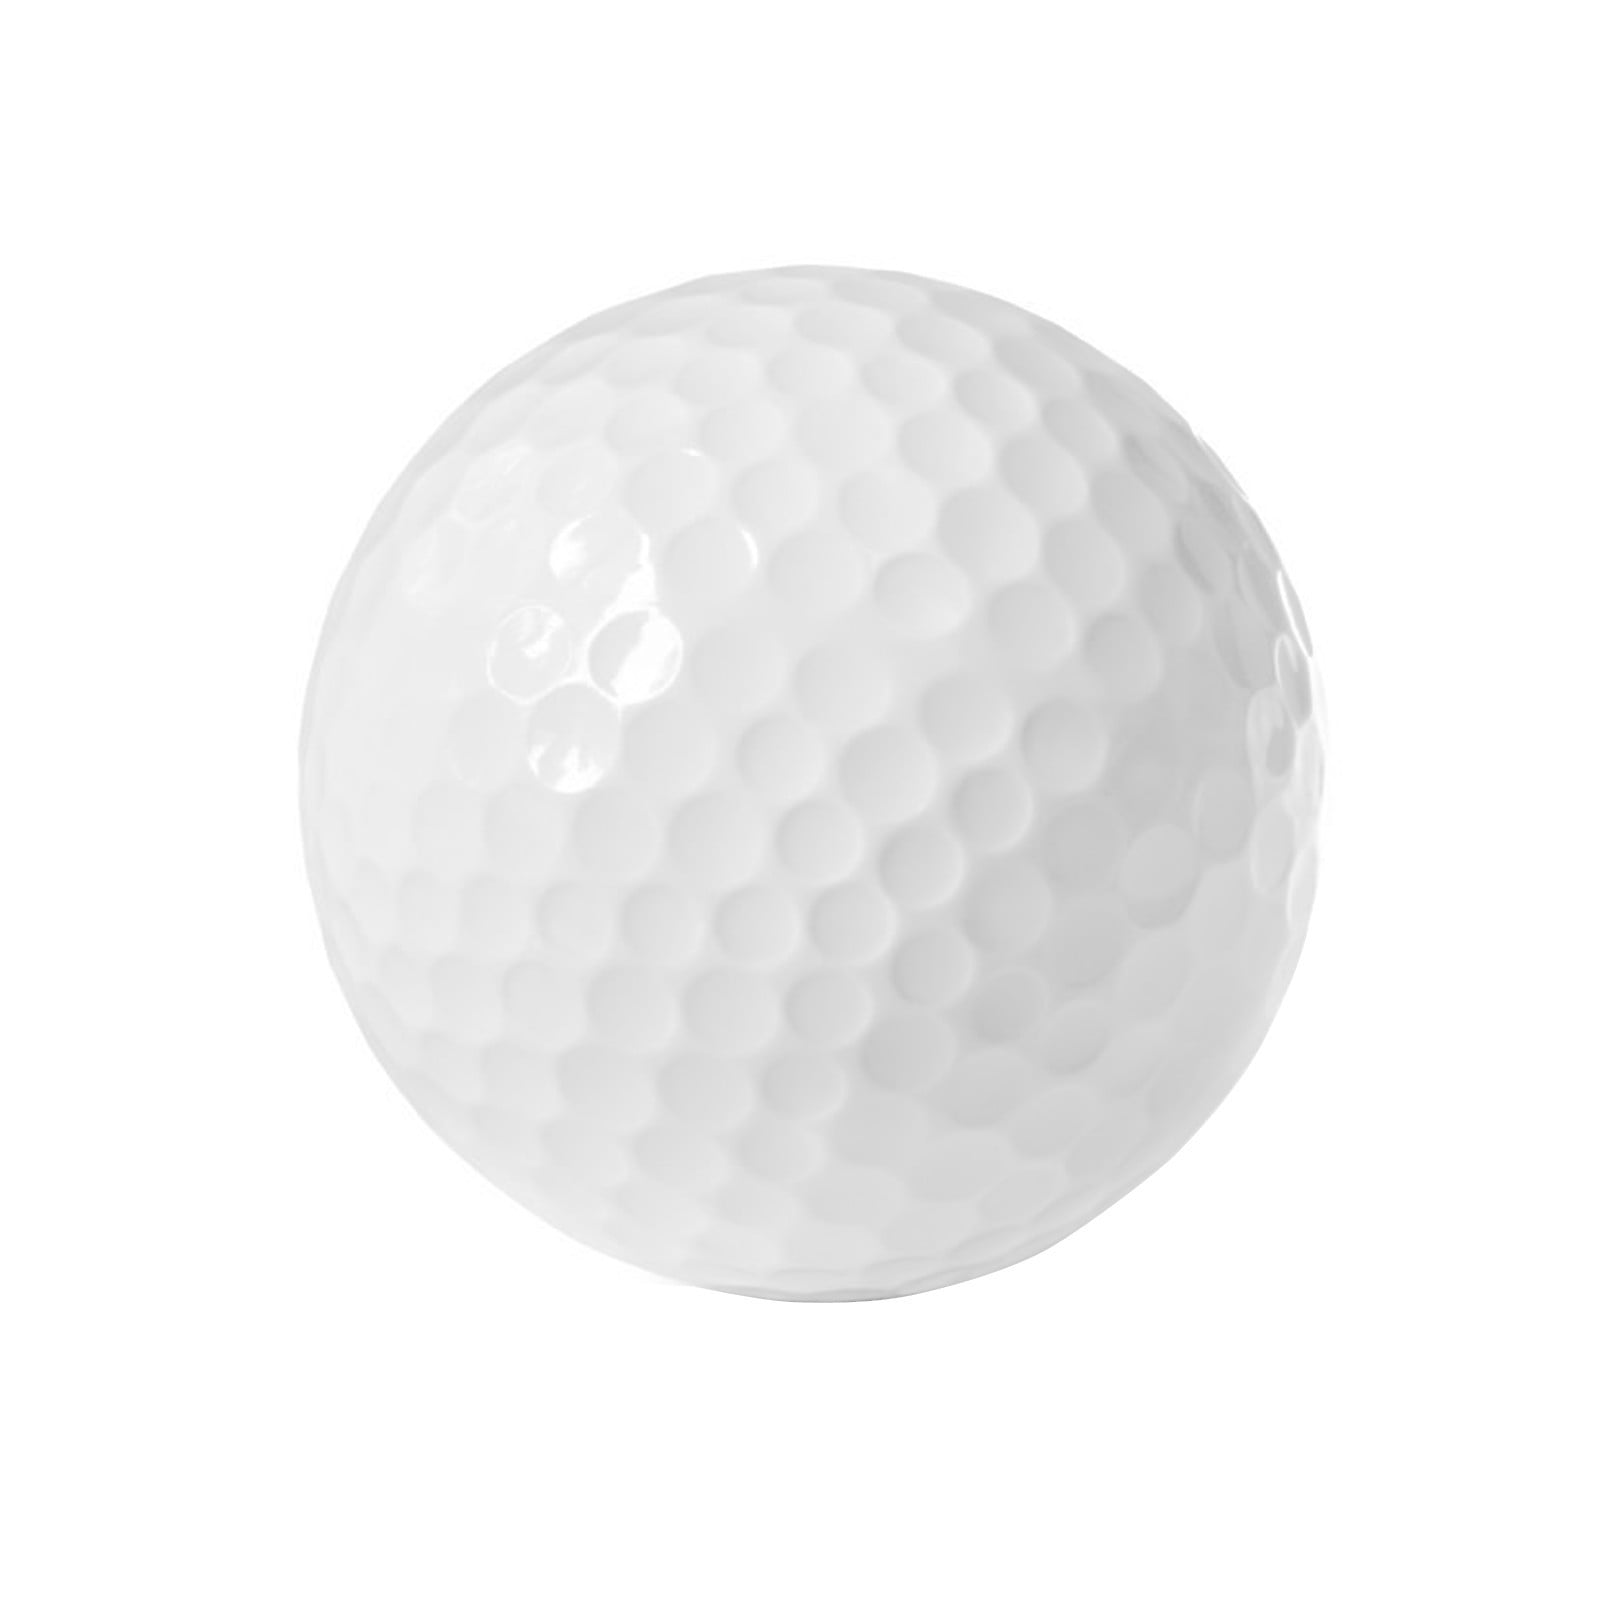 Golf Ball Brand New Golf Practice Ball Synthetic Rubber Material - Walmart.com